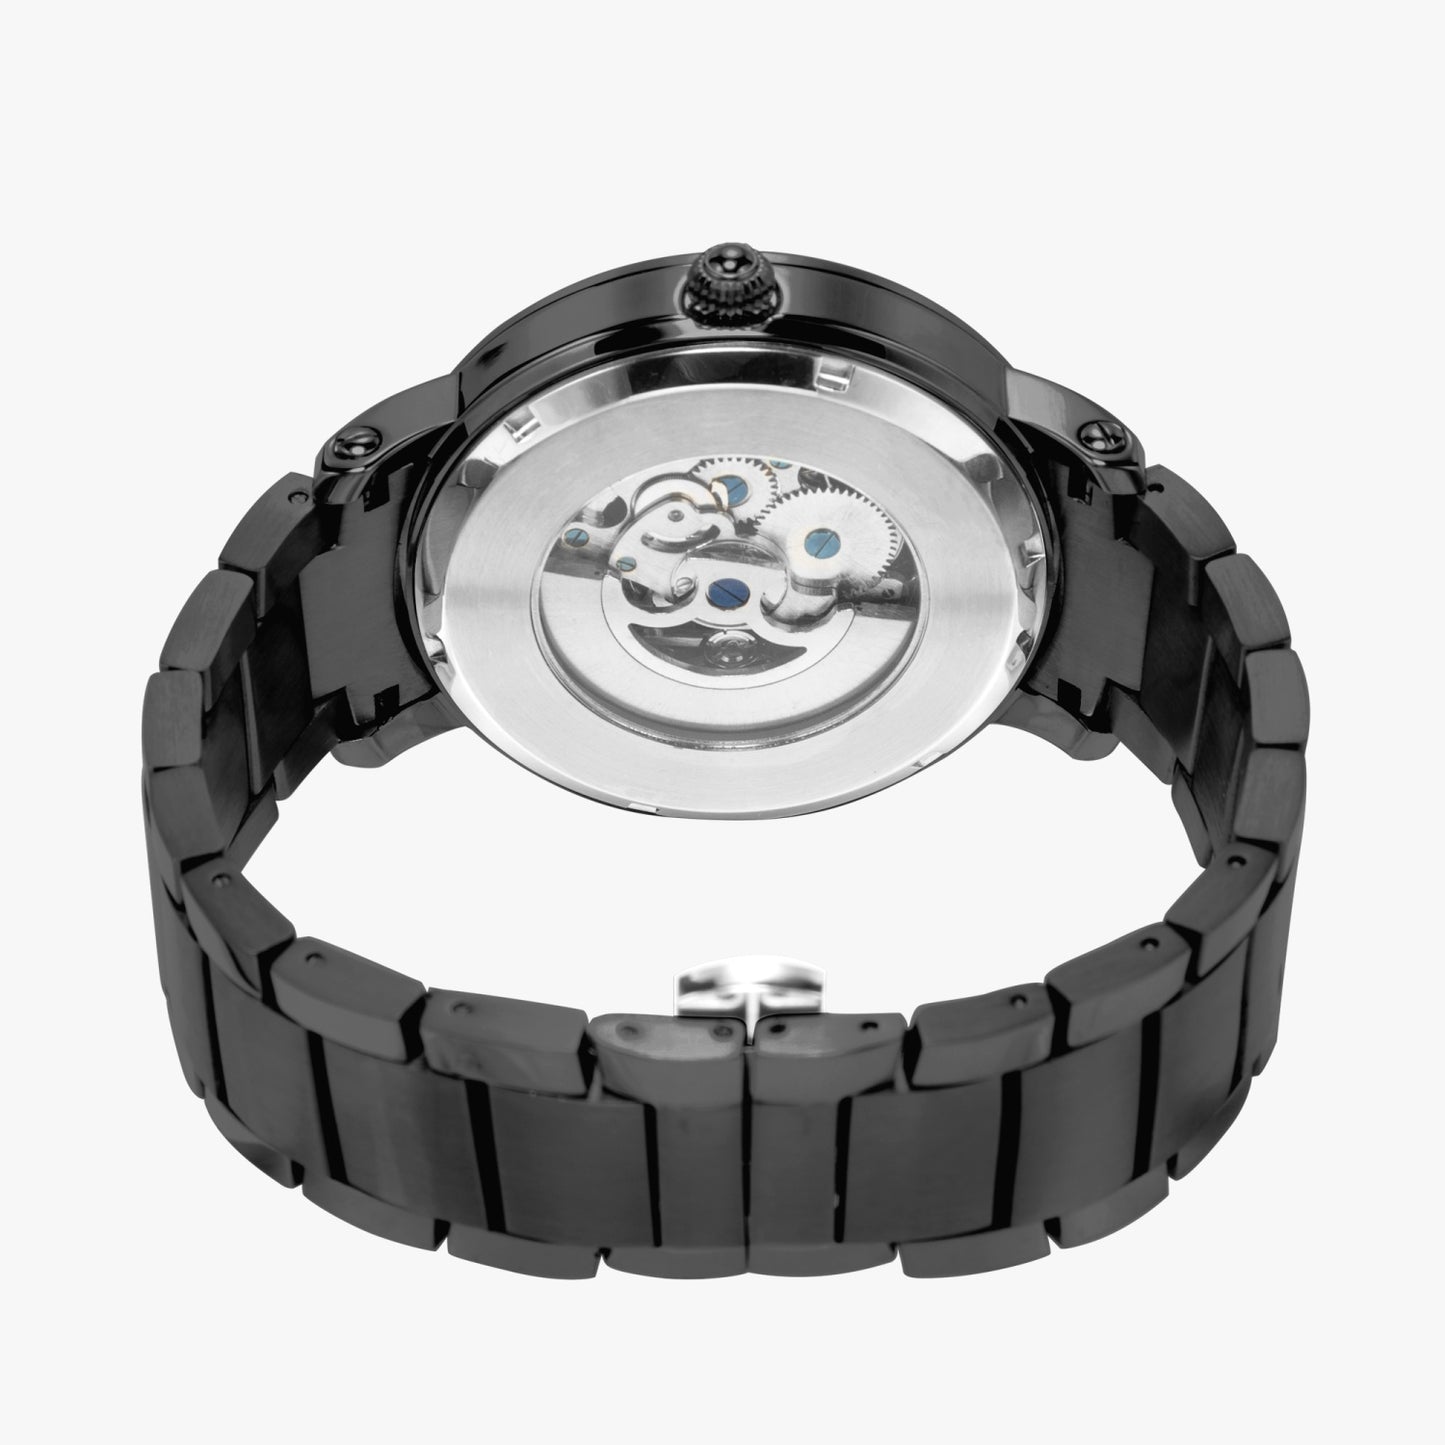 Milano Italia Automatic Movement Watch - Premium Stainless Steel